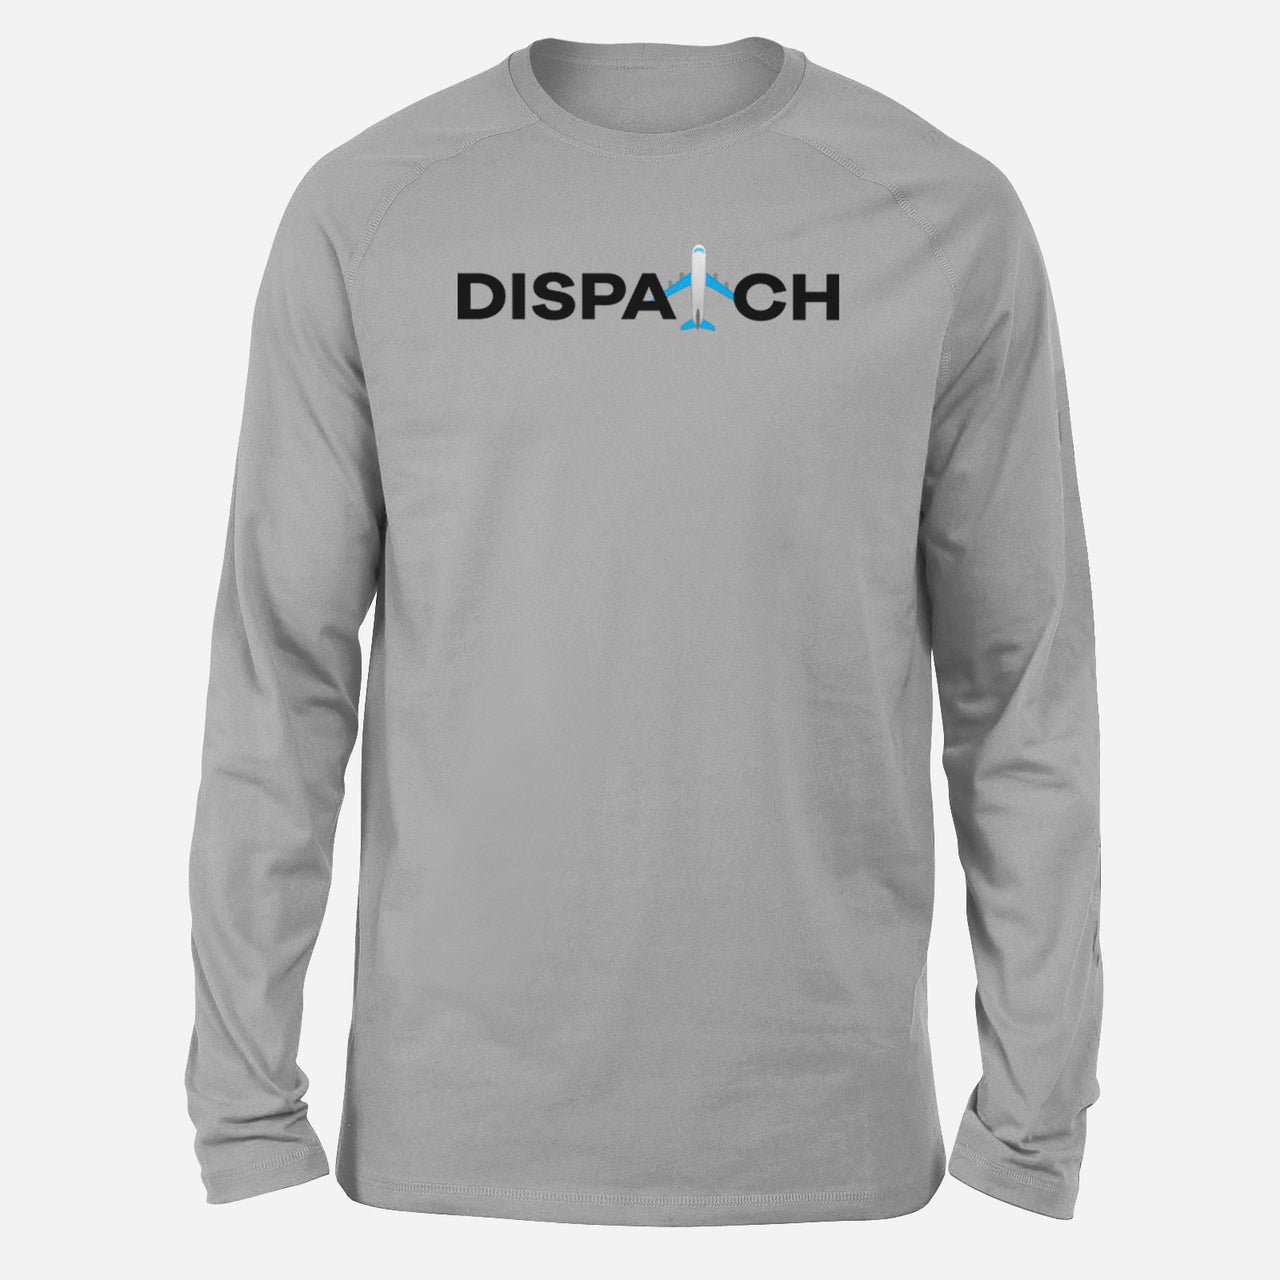 Dispatch Designed Long-Sleeve T-Shirts